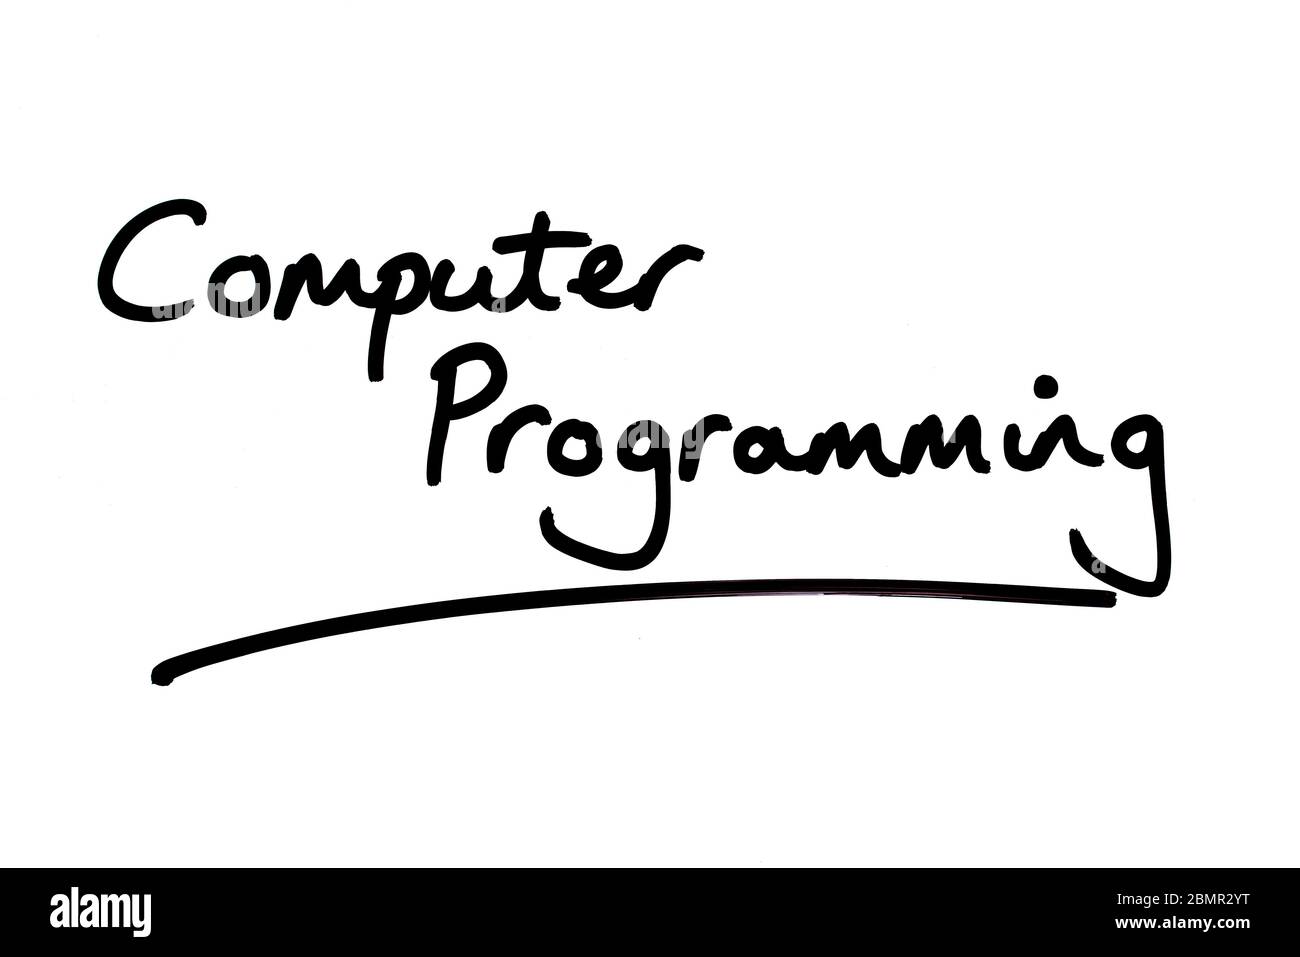 Computer Programming handwritten on a white background. Stock Photo